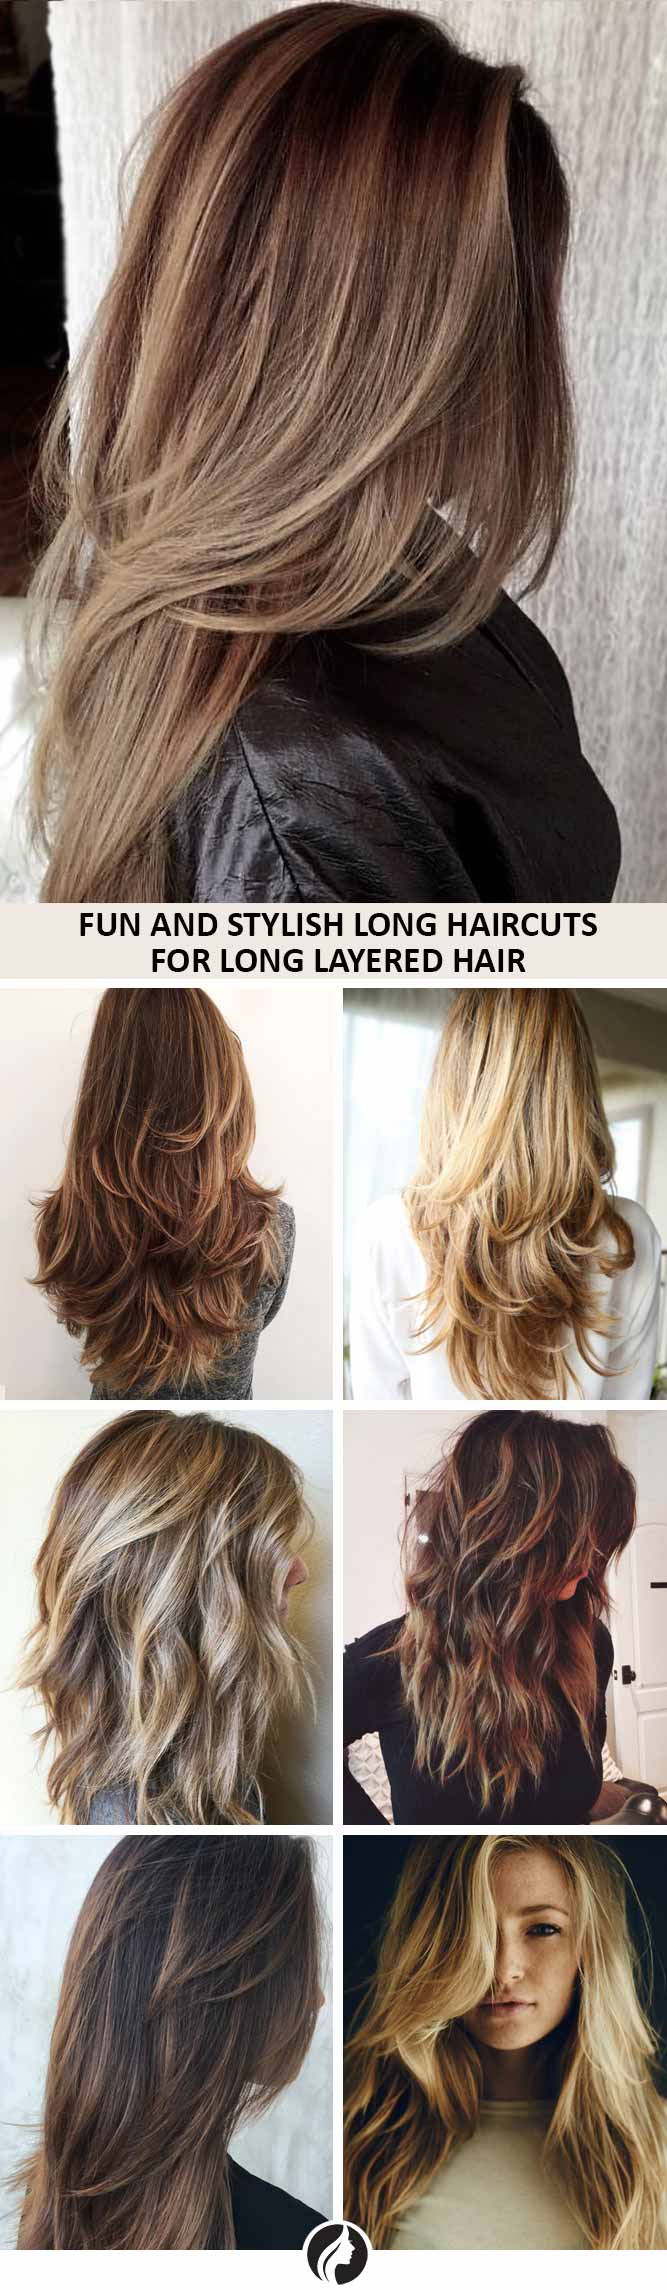 Fun and Stylish Long Haircuts for Long Layered Hair